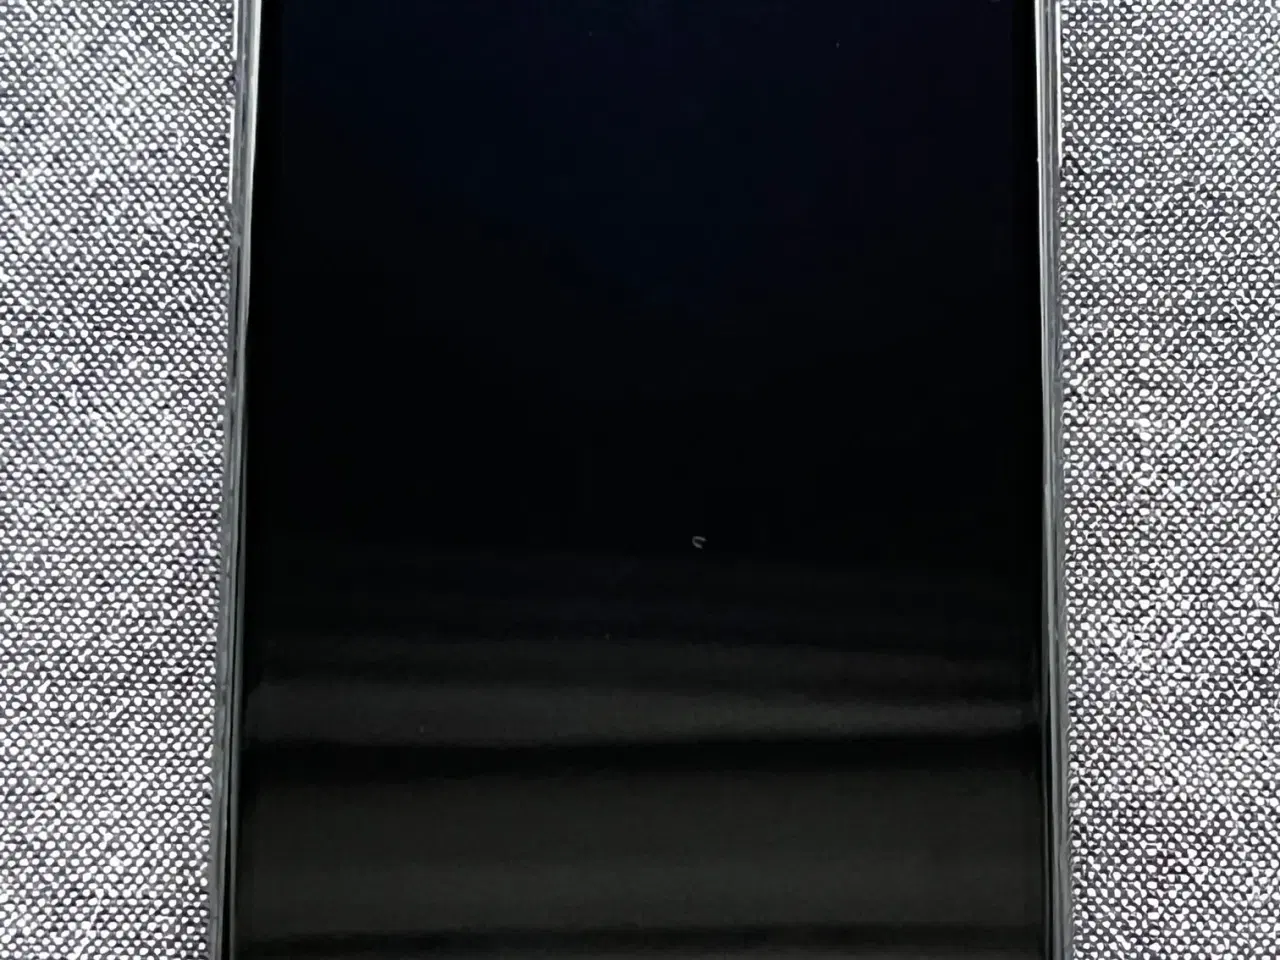 Billede 1 - Iphone X - Space grey - 64gb